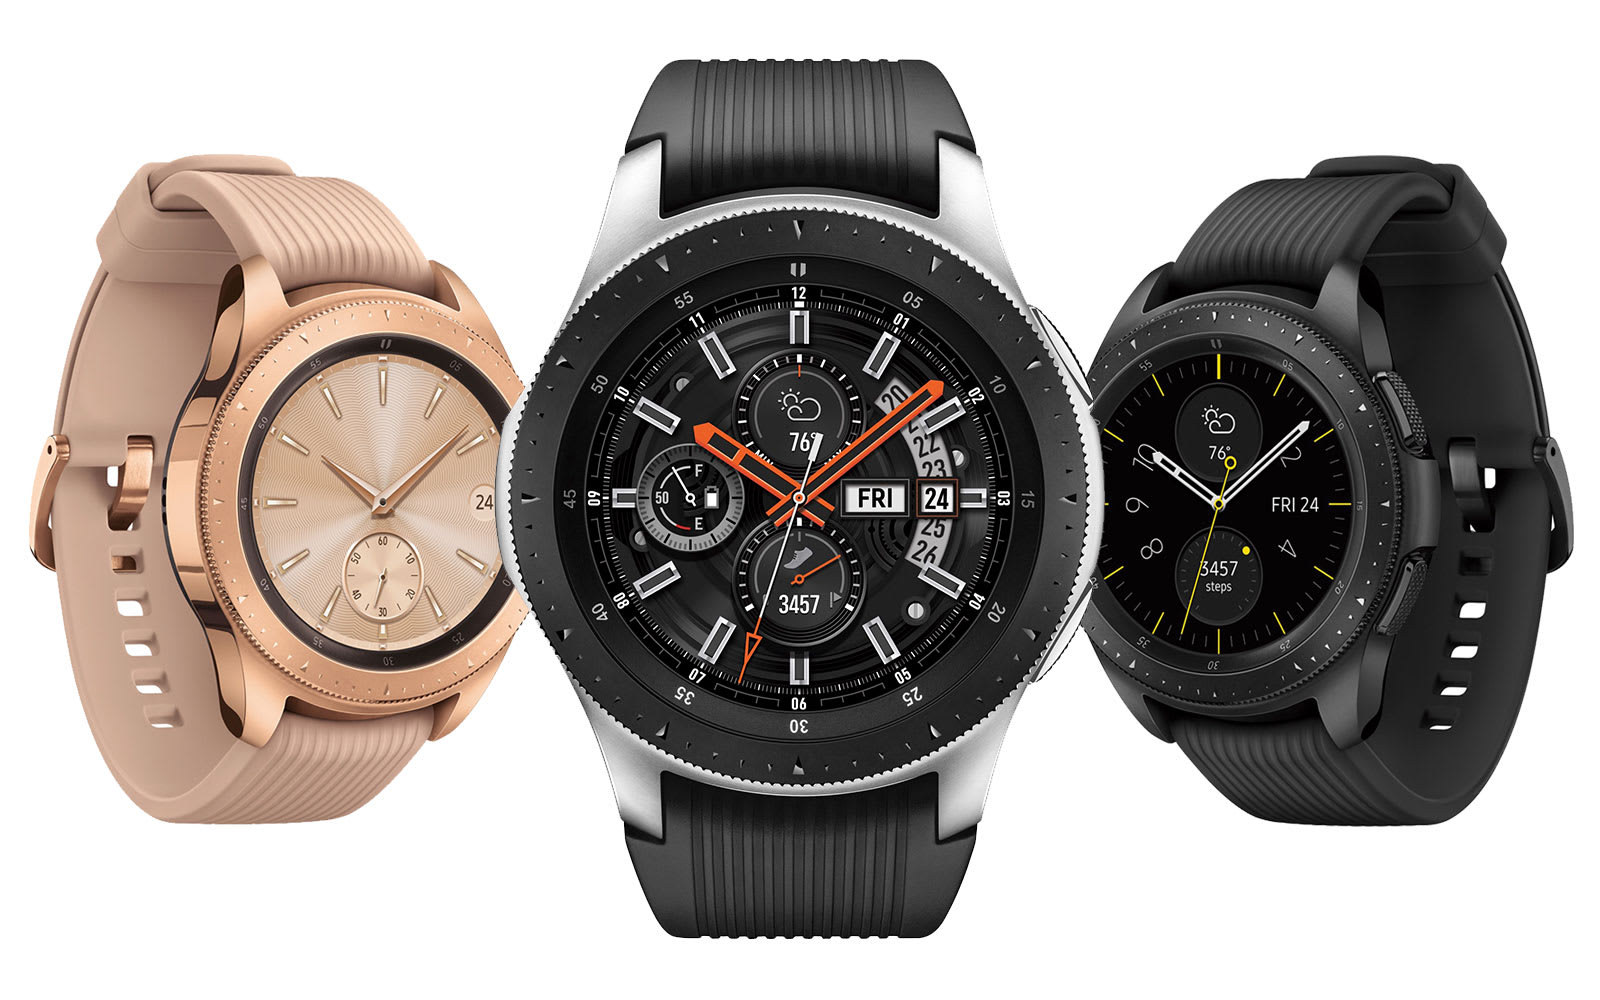 Samsung's Galaxy Watch looks like a real watch